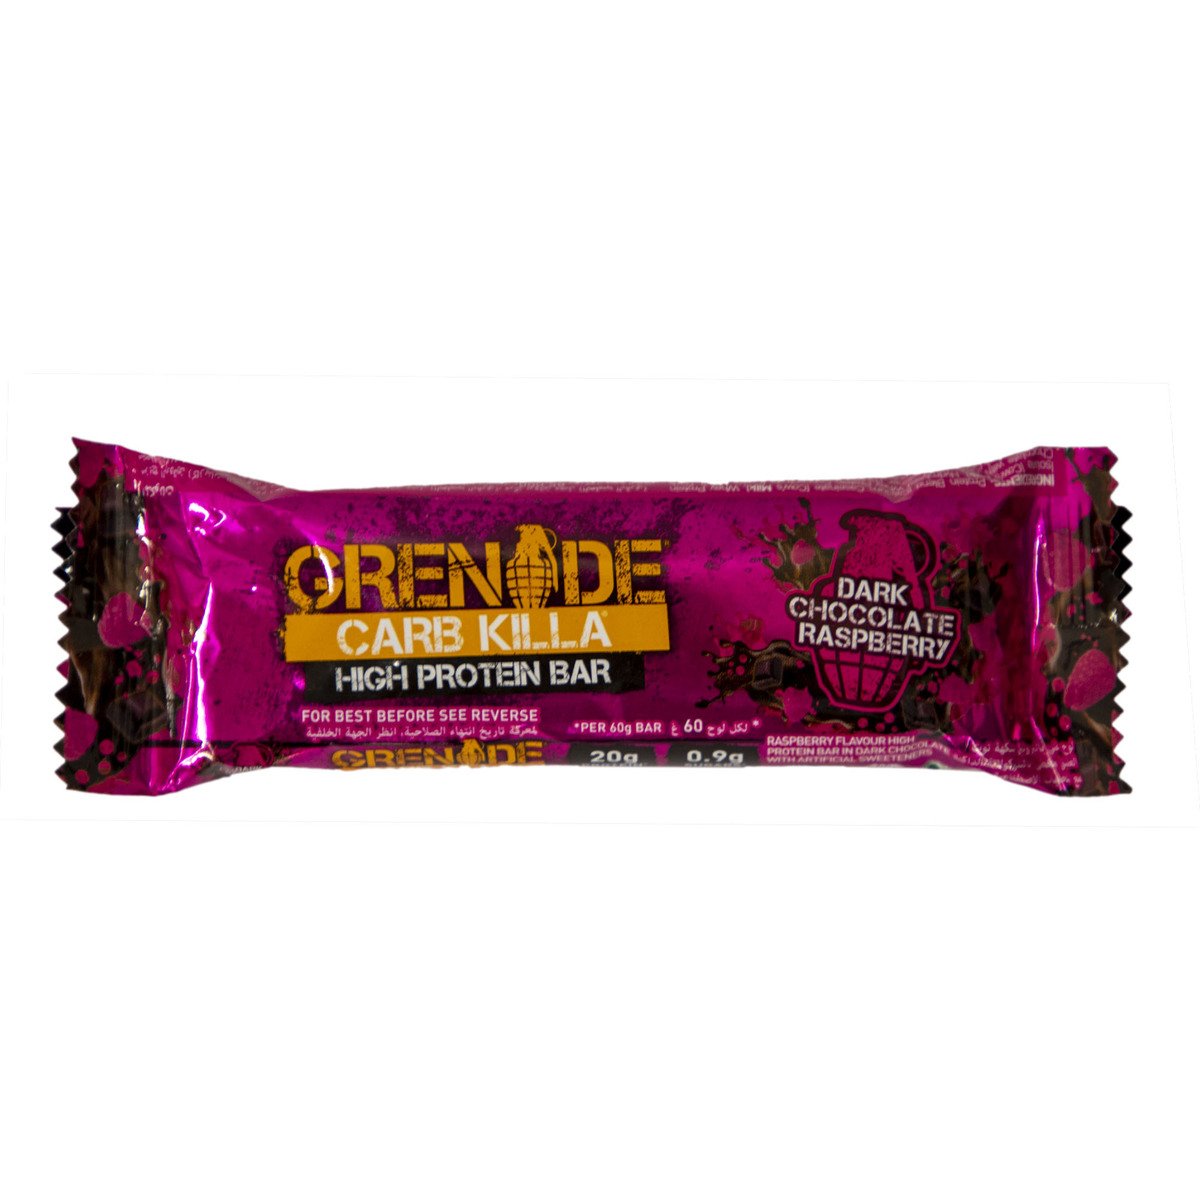 Grenade Carb Killa Dark Chocolate Raspberry High Protein Bar 60g